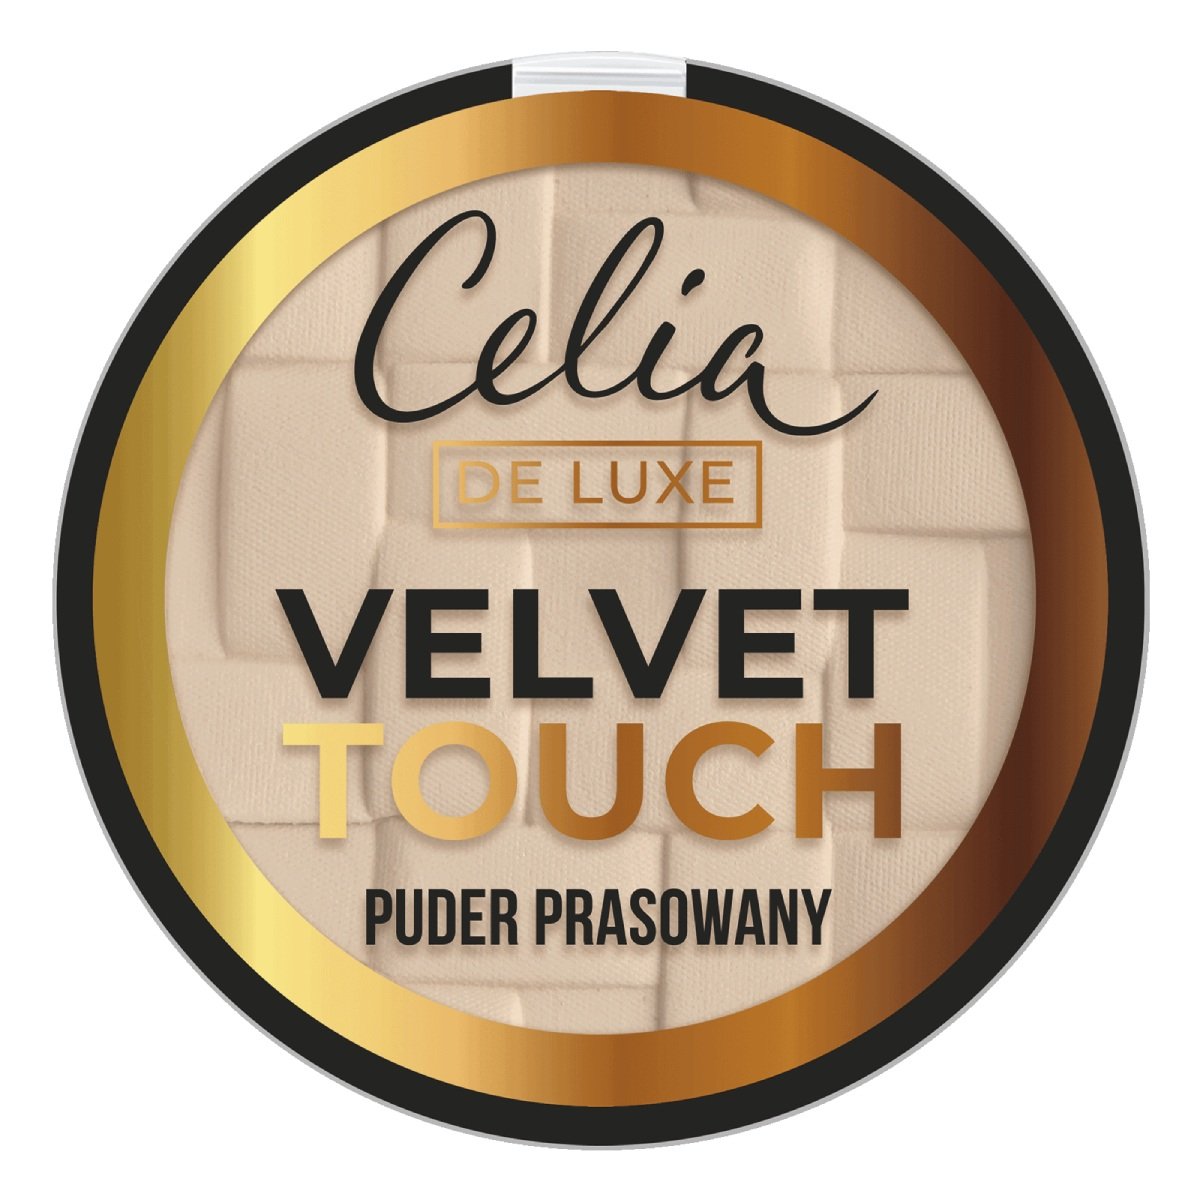 Celia Velvet Touch Puder prasowany 102 Natural Beige